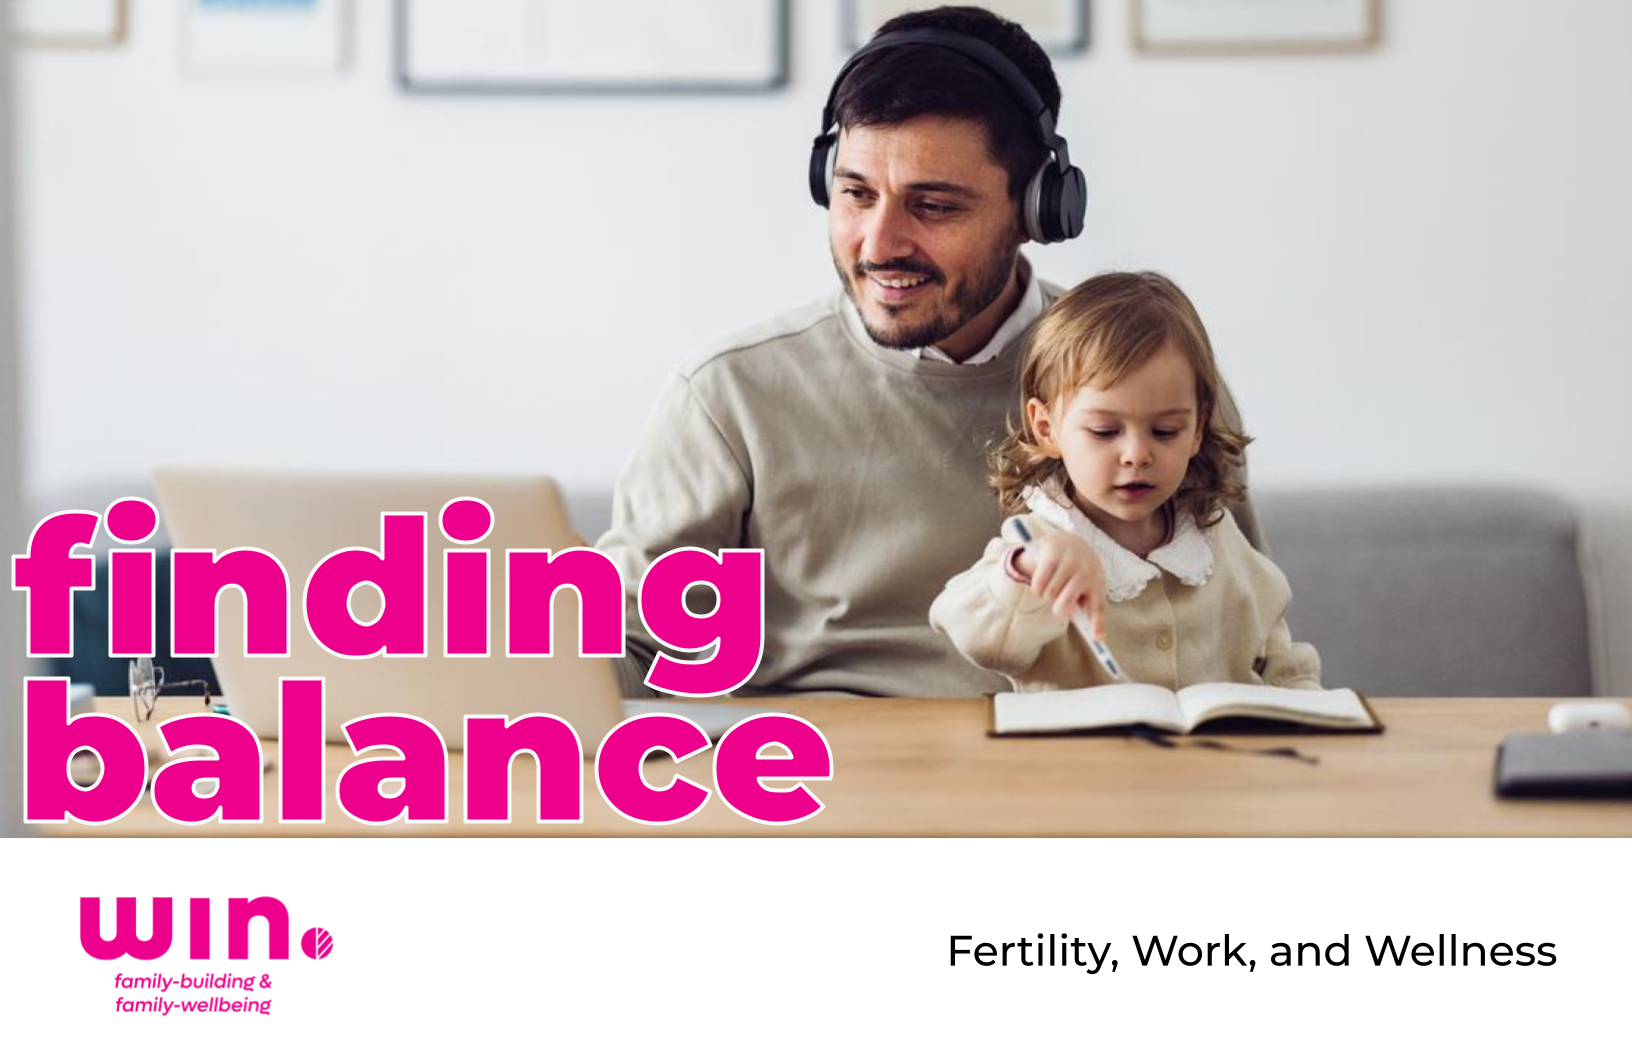 Image description Finding Balance - Fertility, Work, and Wellness